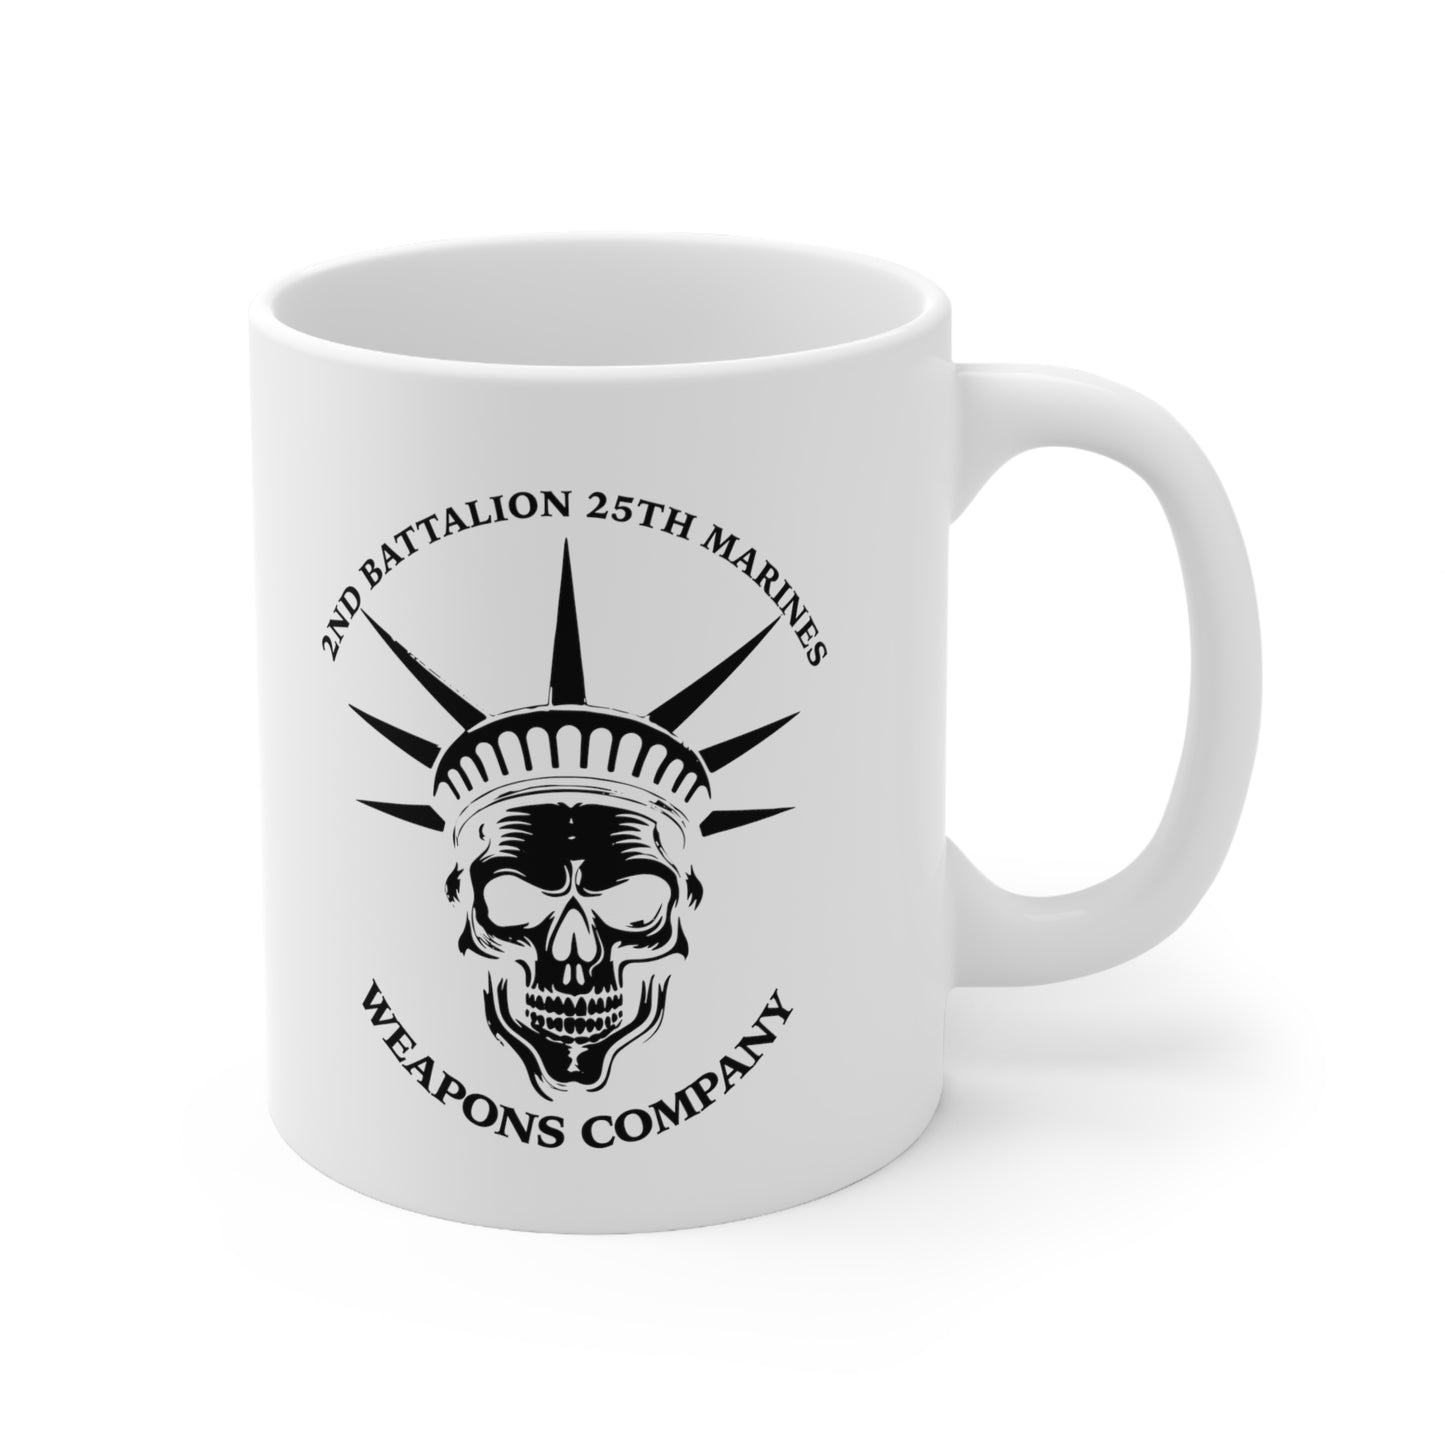 2/25 Weapons Company Mug